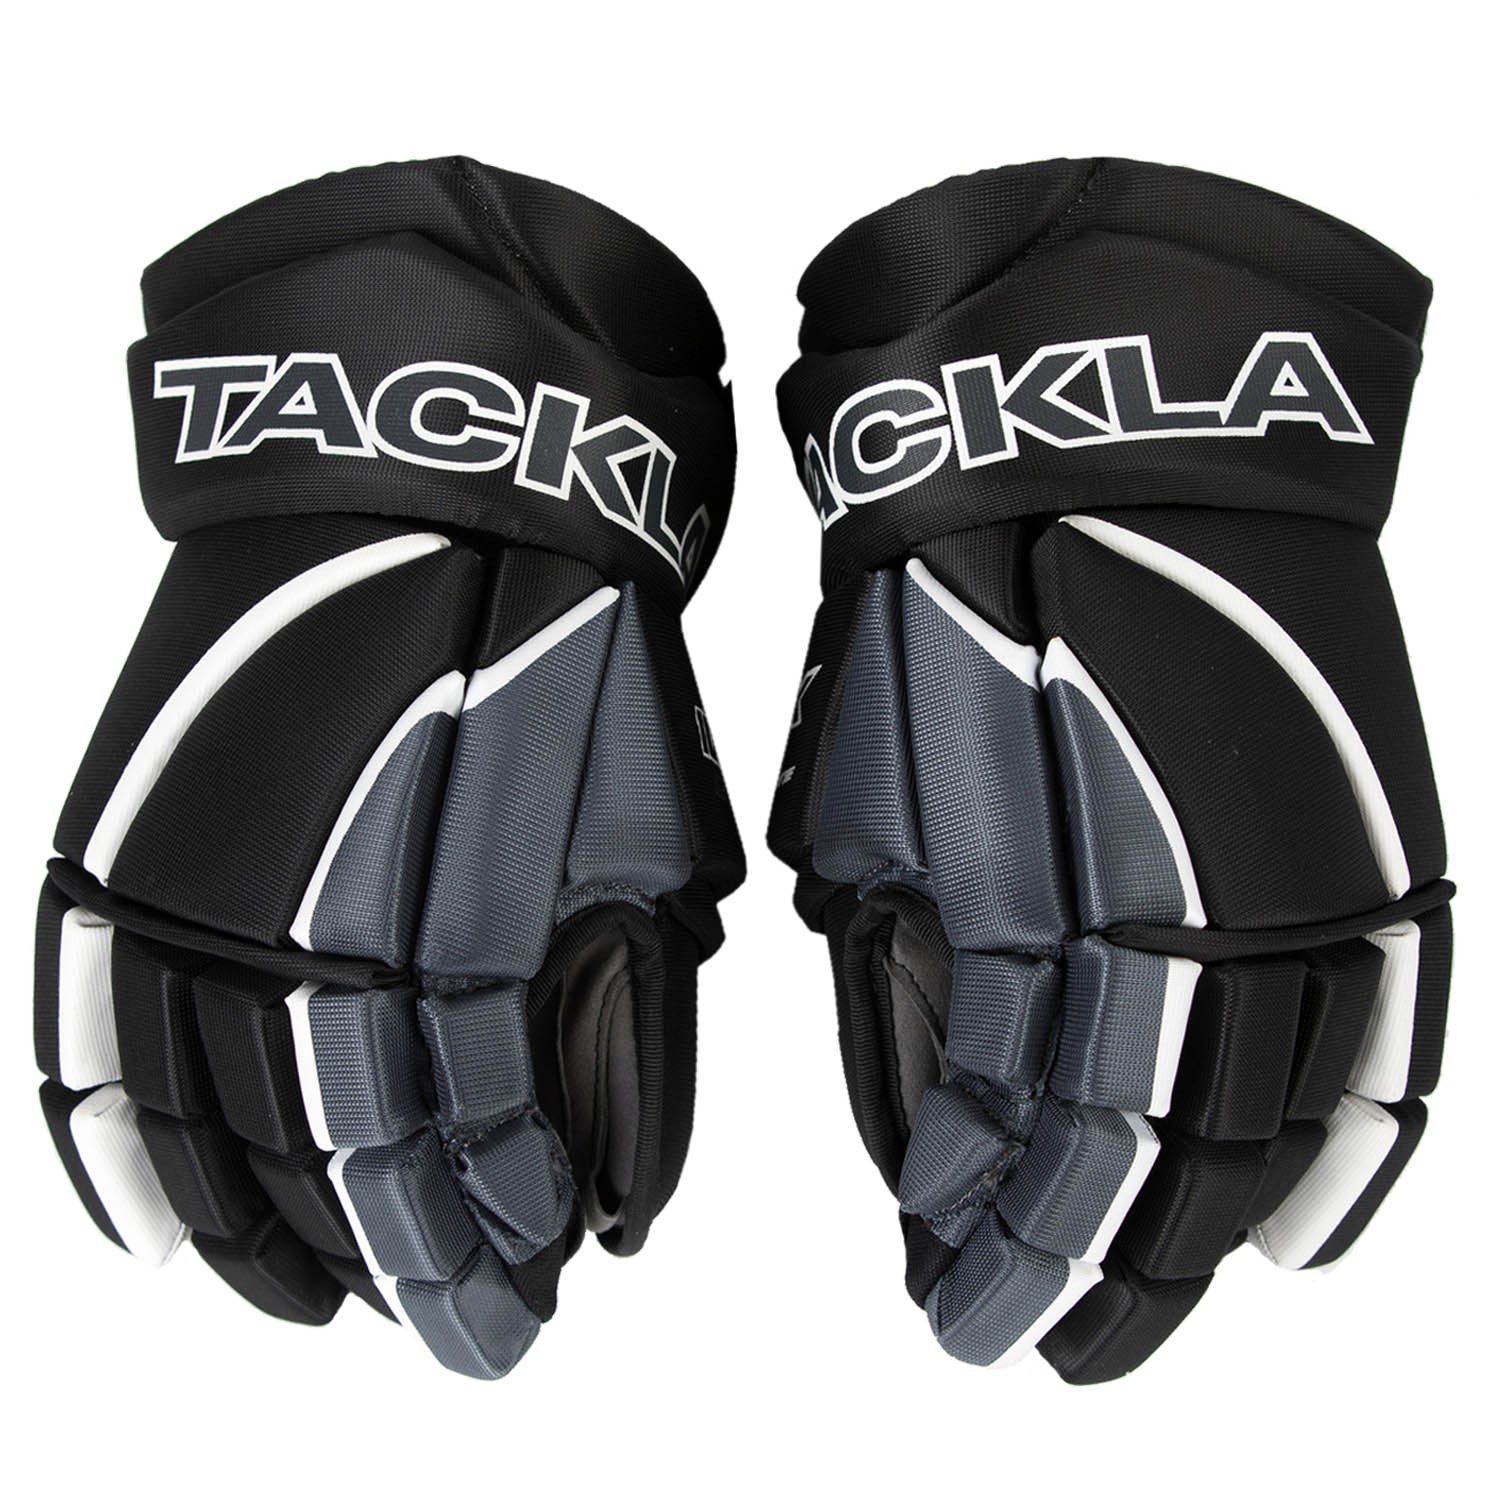 TACKLA 1000X Pro Zone Senior Ice Hockey Gloves